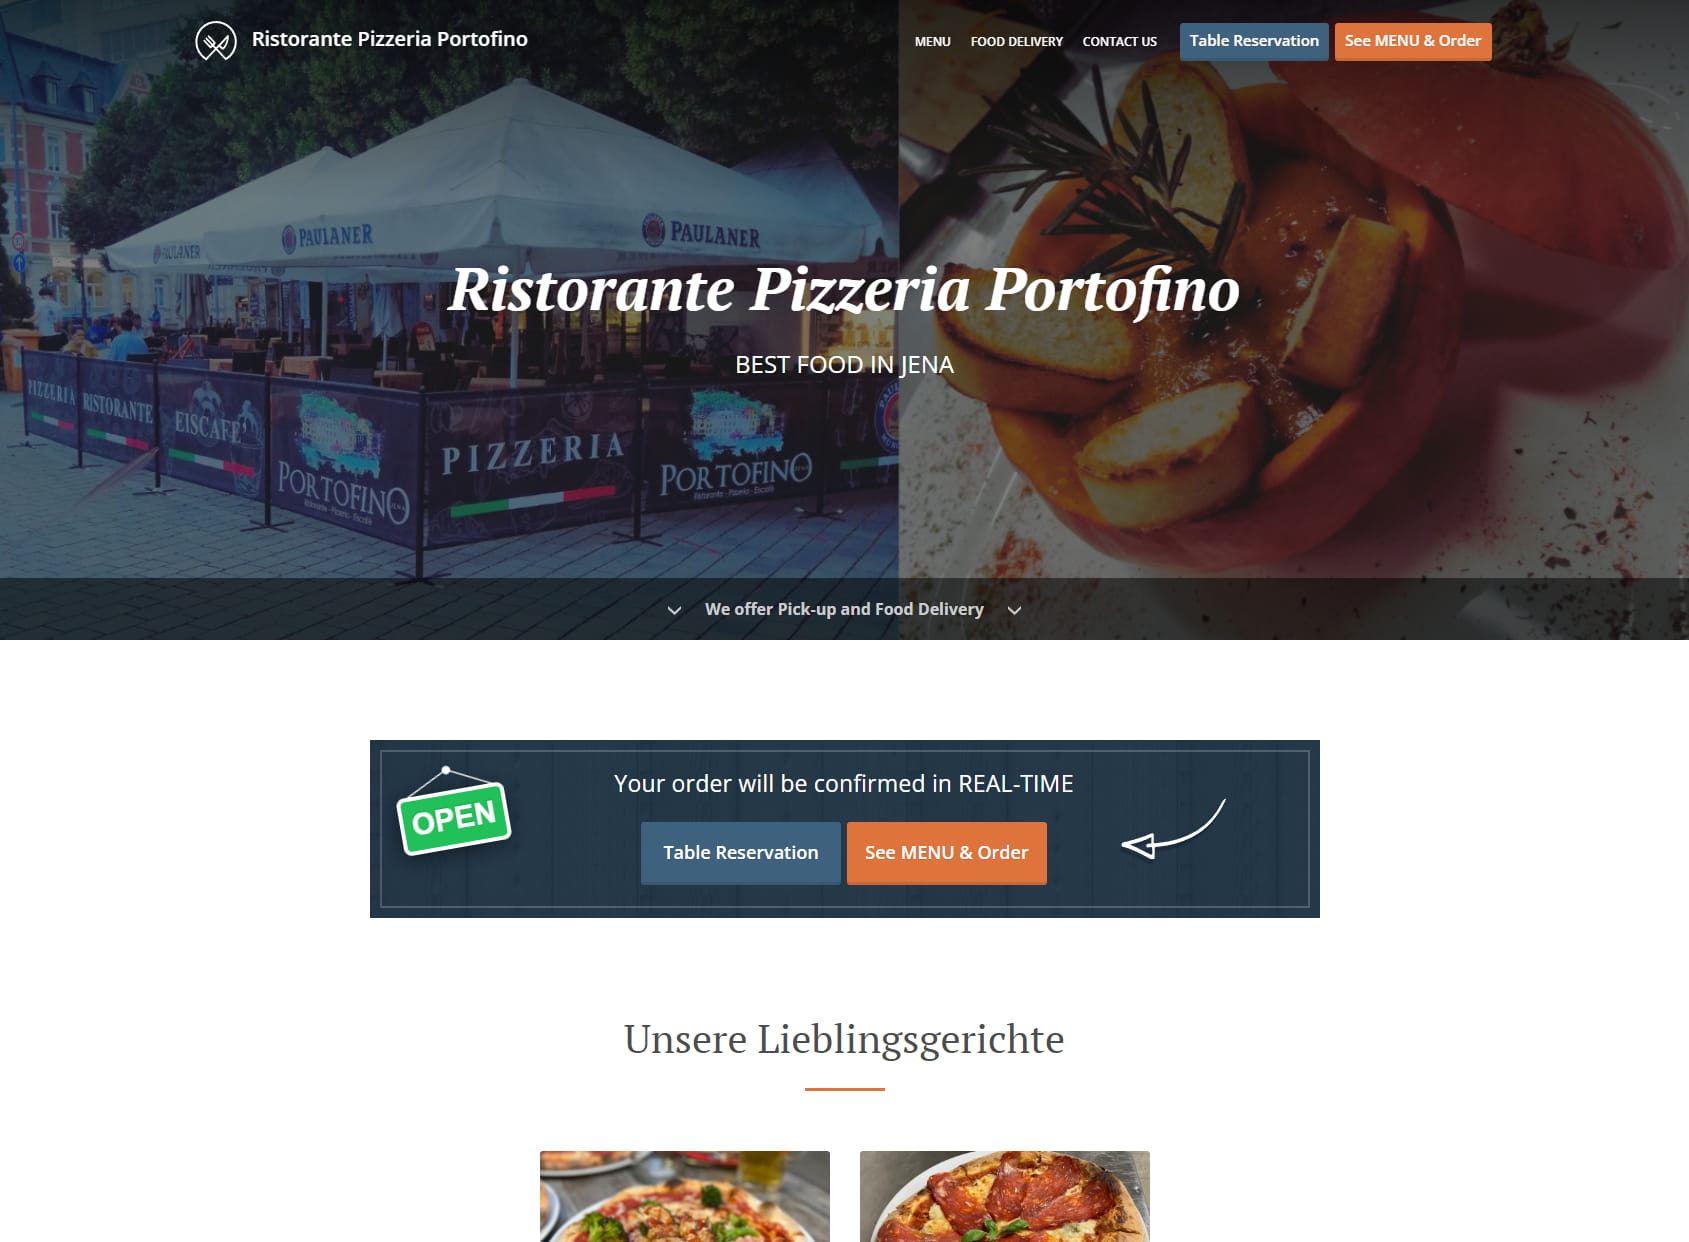 Ristorante Pizzeria Eiscafé Portofino